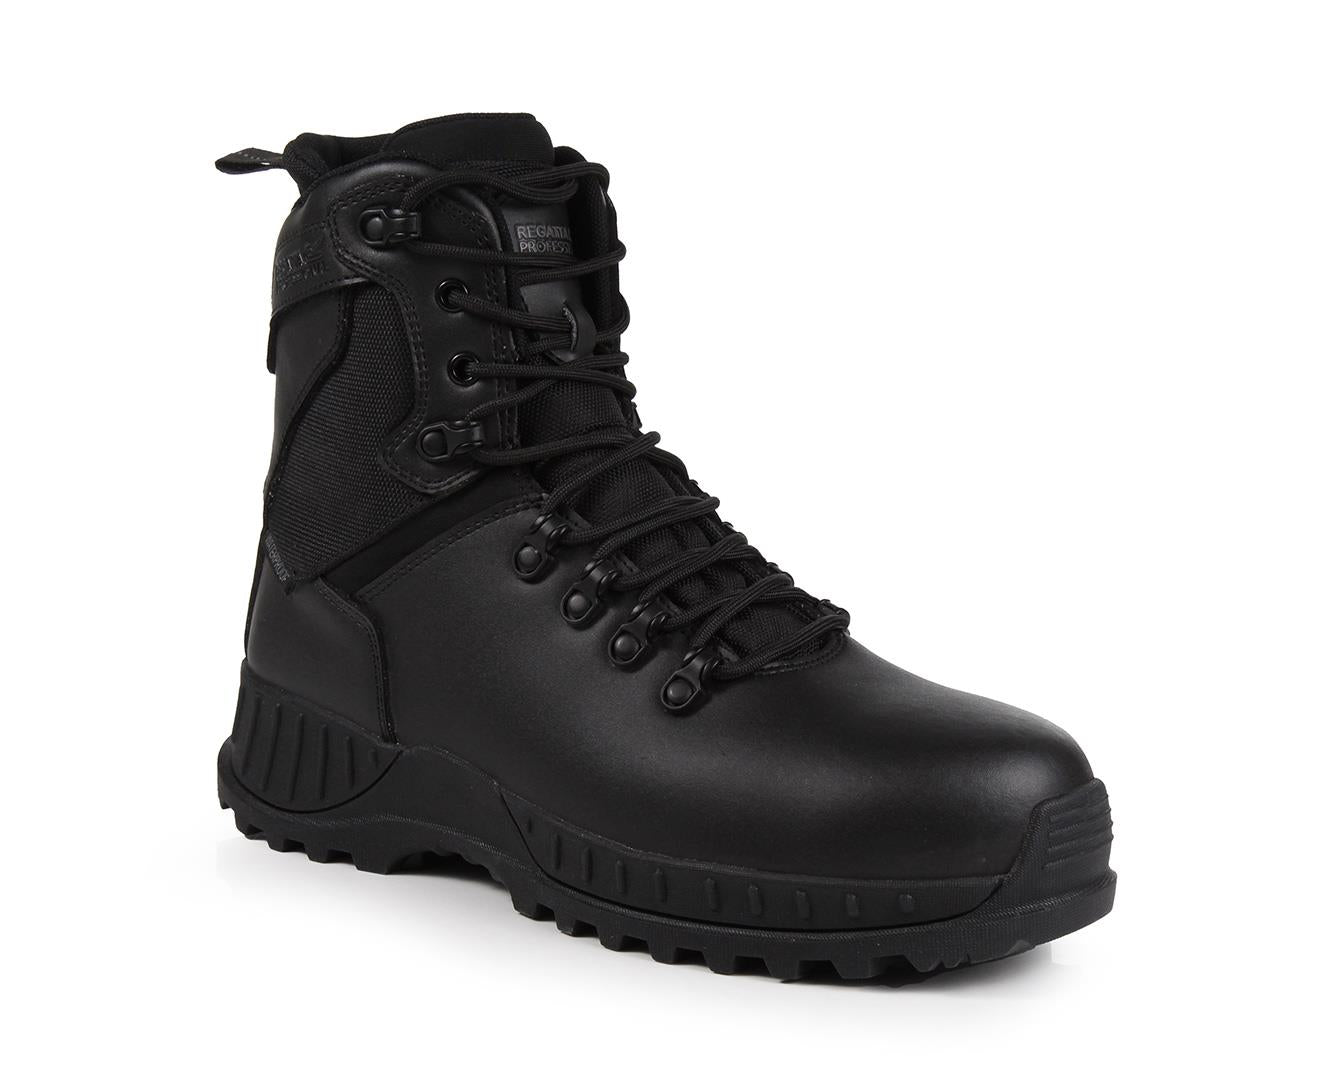 Regatta Basestone S7 black waterproof breathable leather composite toe/midsole safety work boot #TRK213